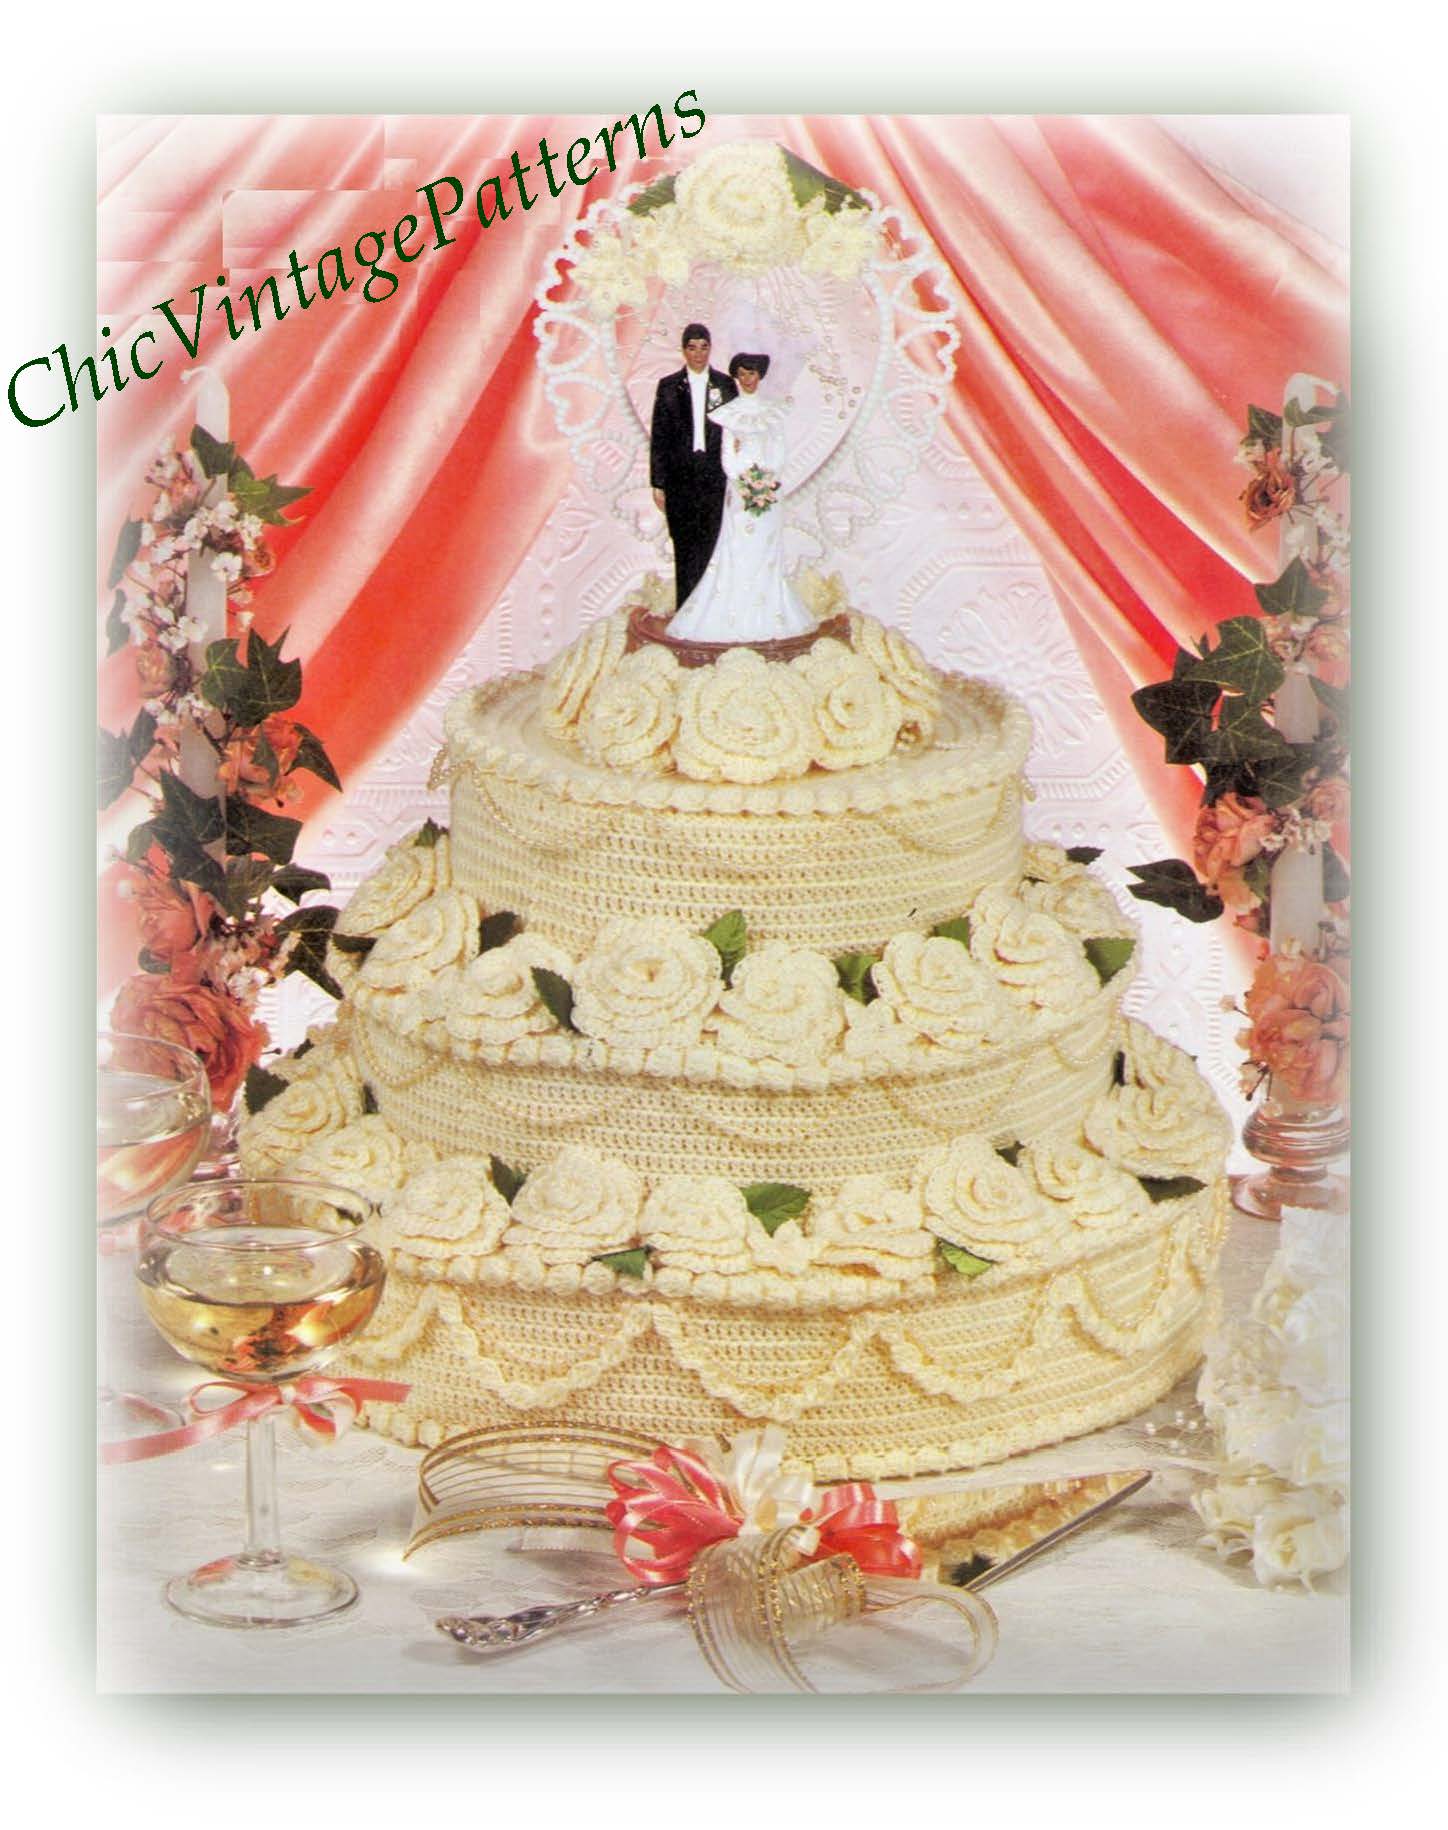 50Th wedding anniversary Cake Decorating Photos